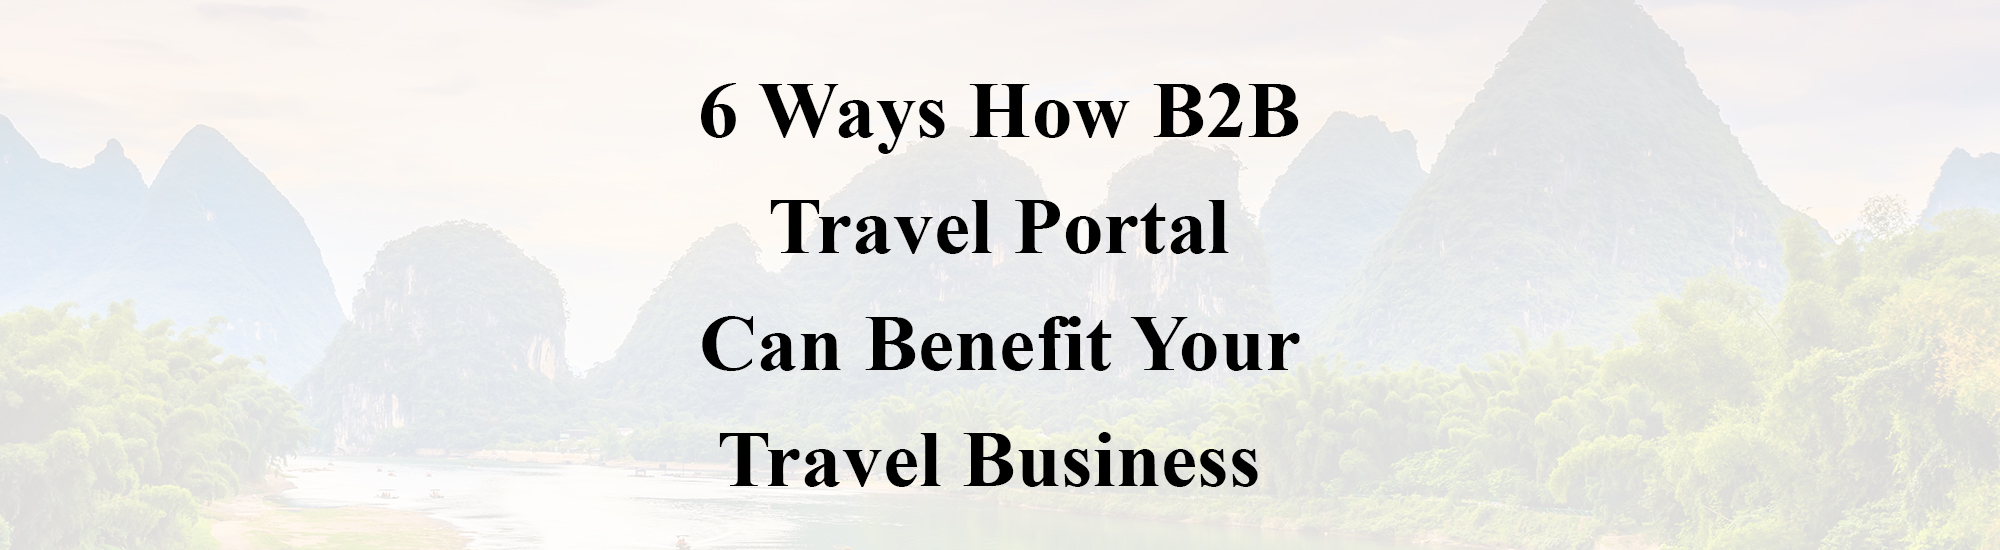 B2B Travel portal